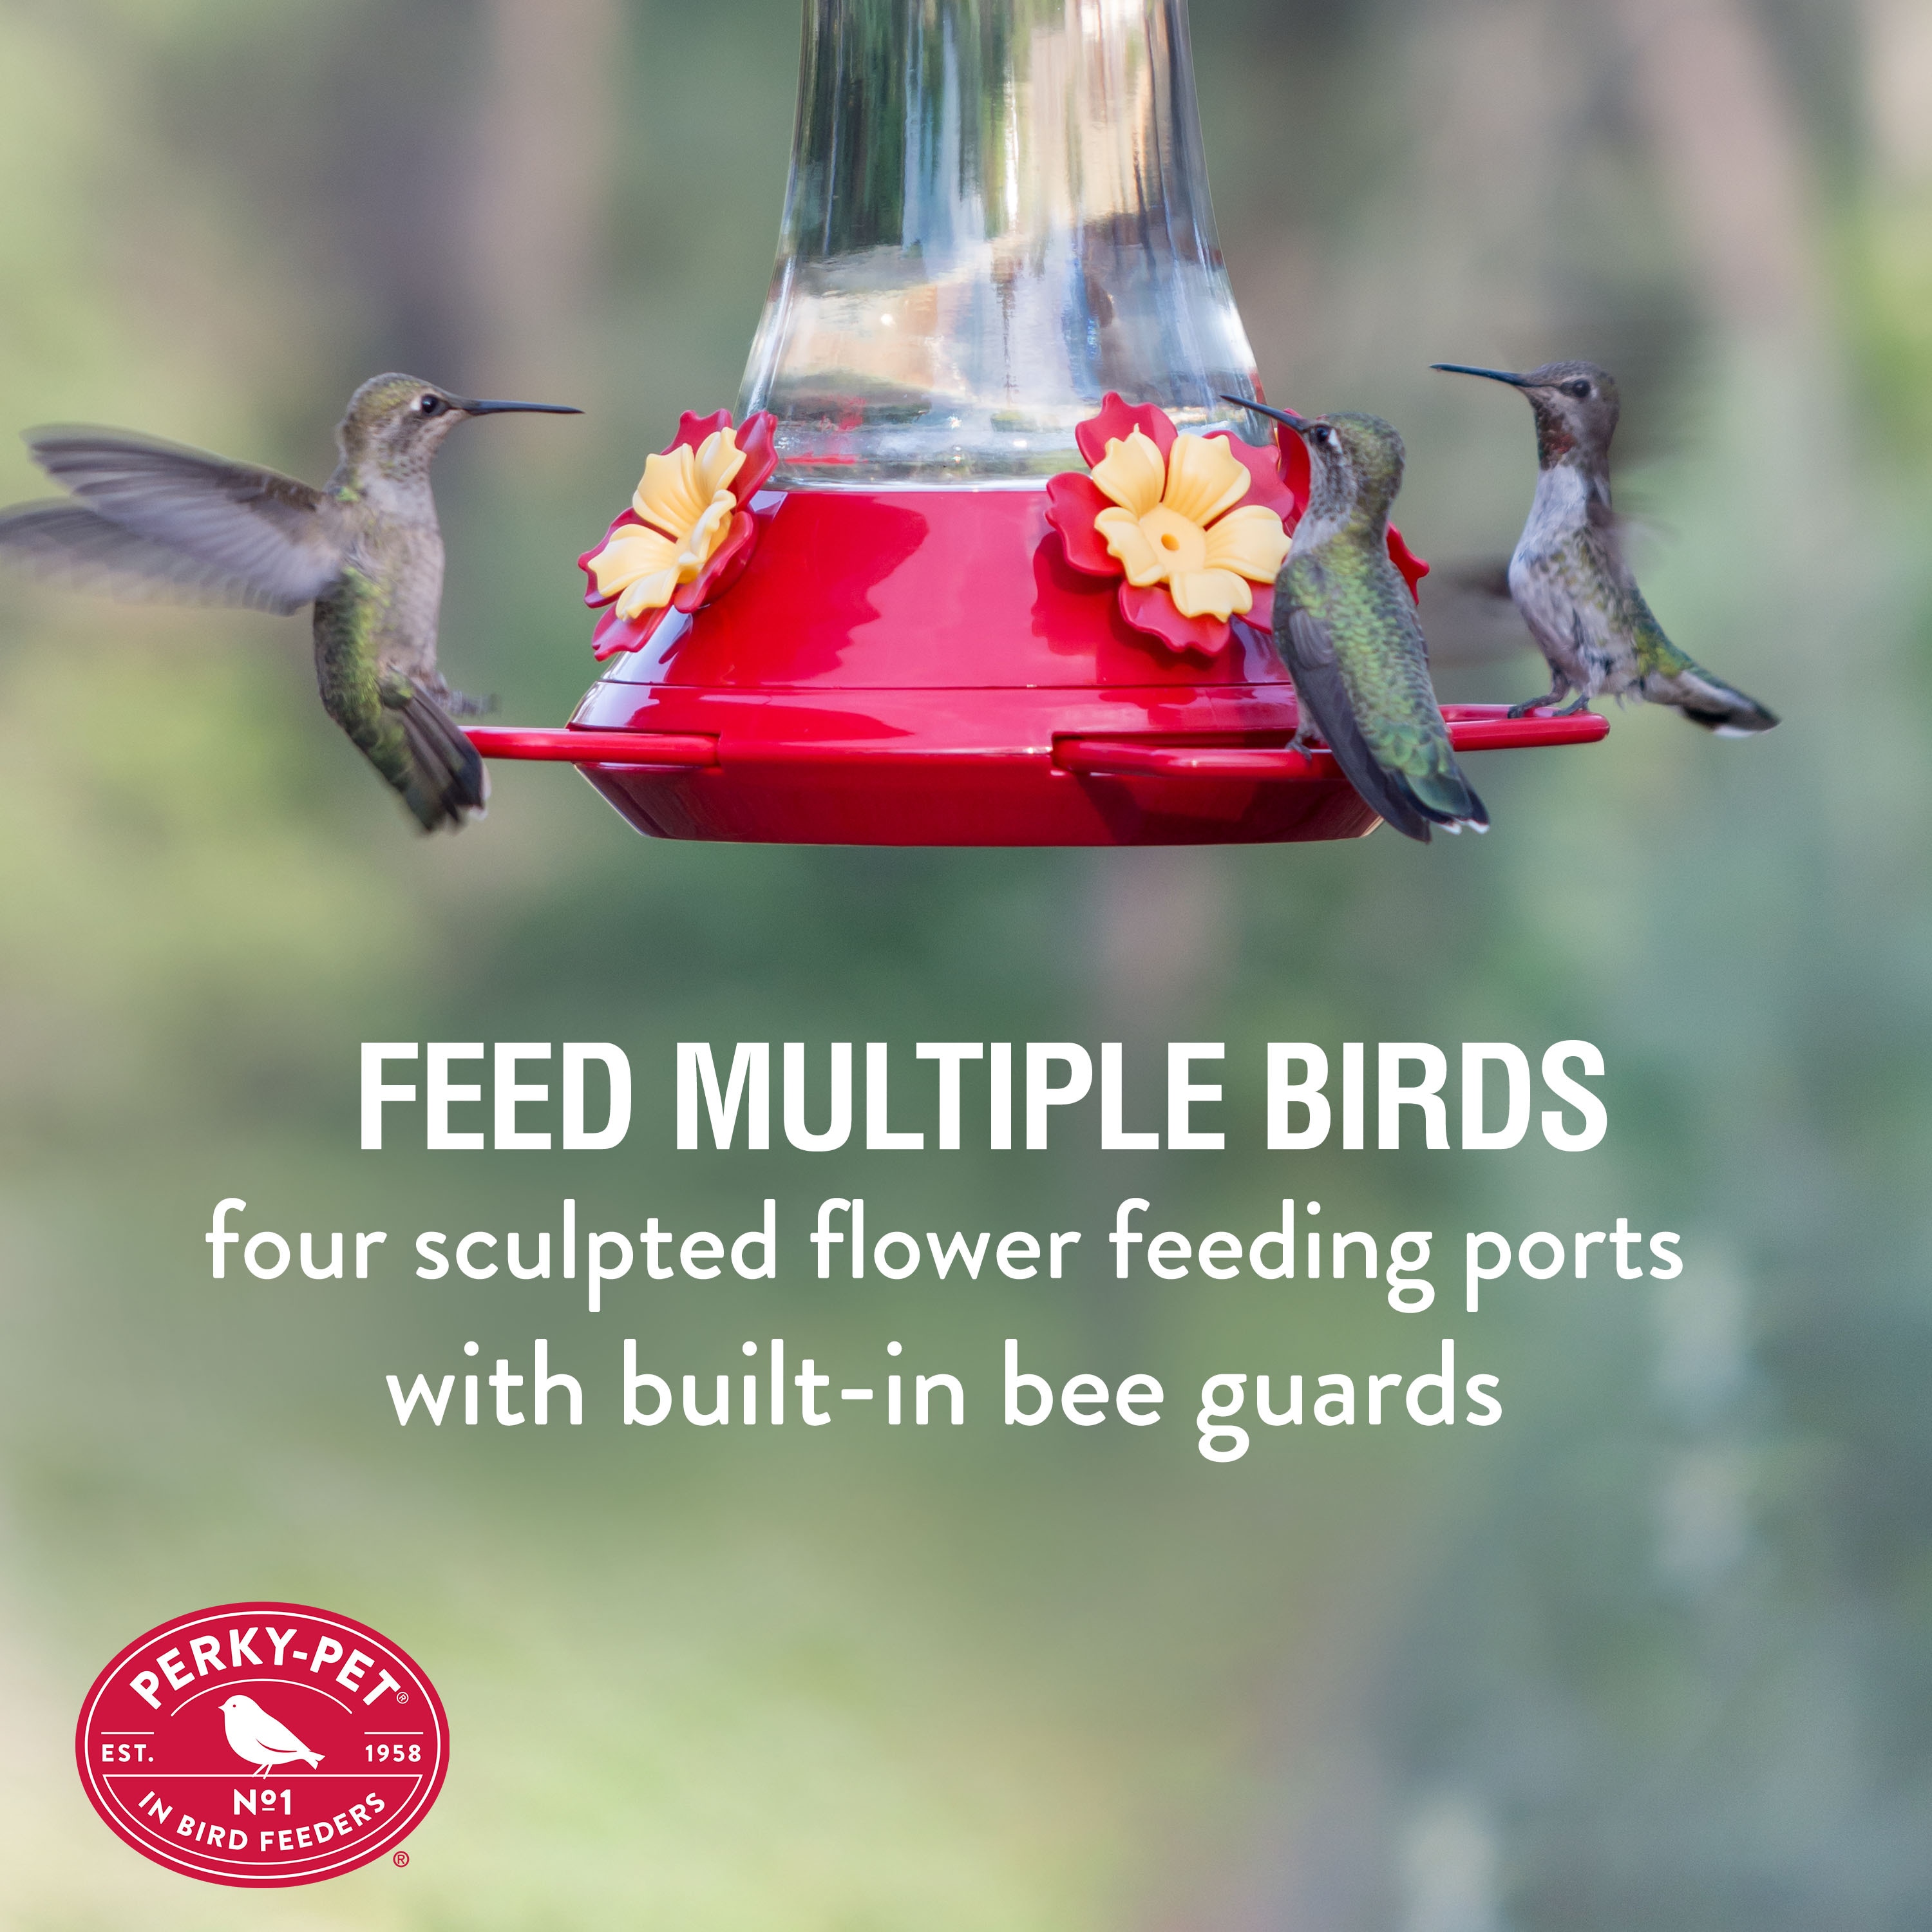 Take Glamor Shots of Hummingbirds With the New Bird Buddy Feeder - CNET